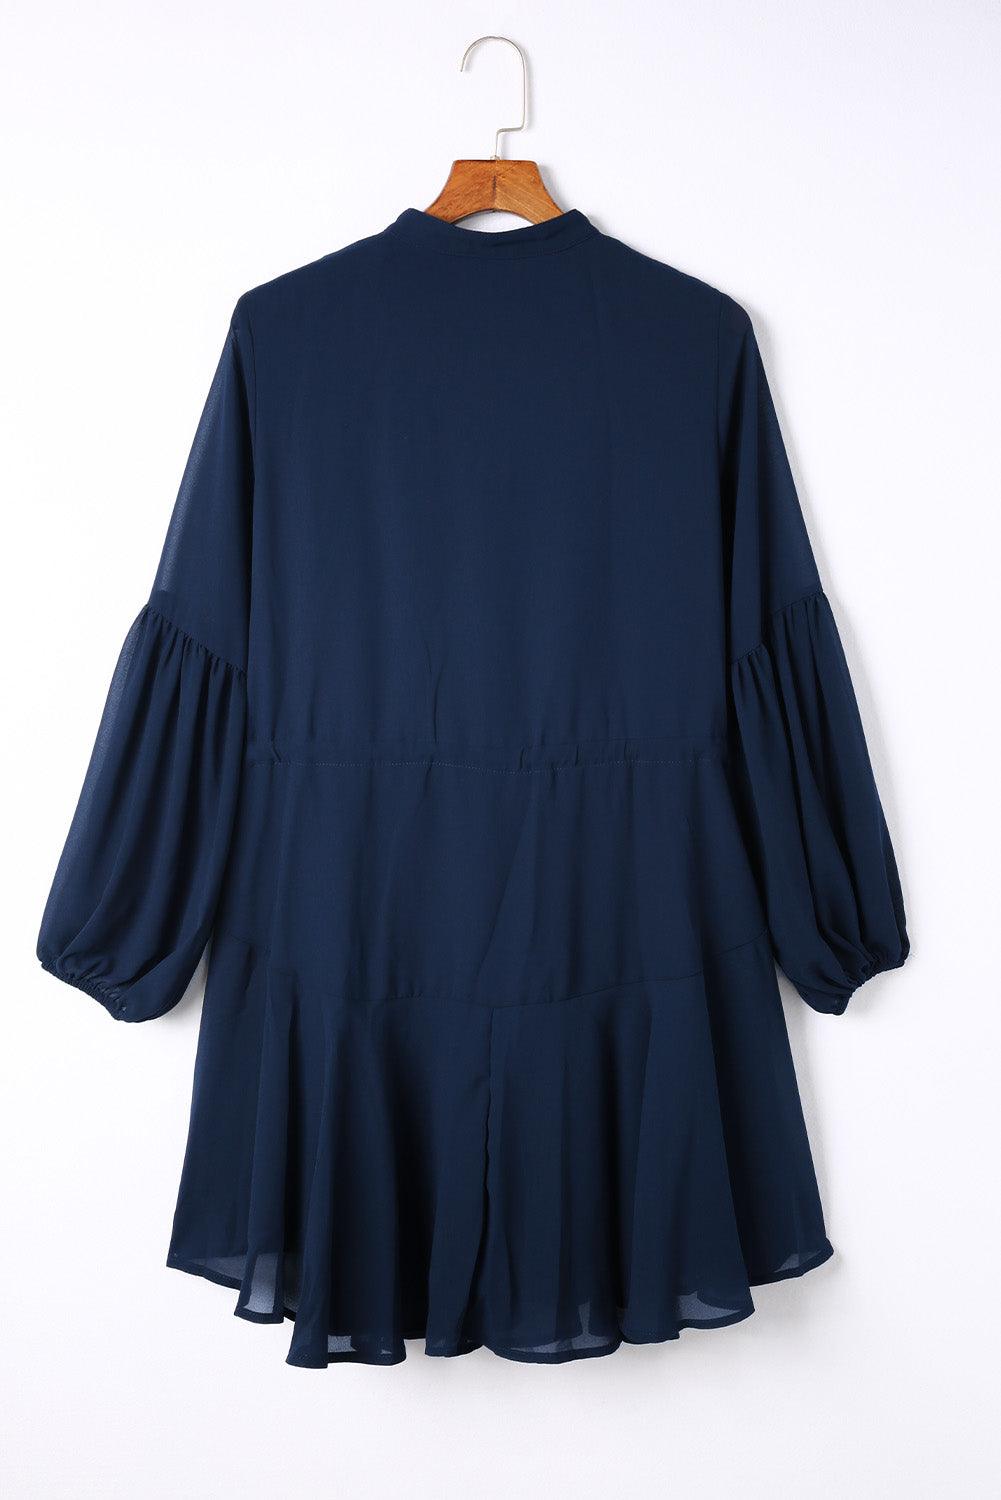 Buttoned Round Neck Mini Dress - Flyclothing LLC